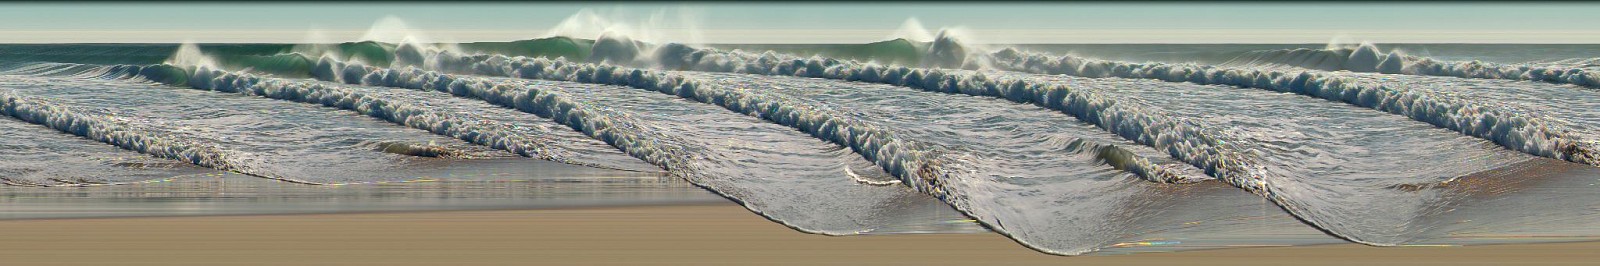 Jay Mark Johnson, CULBURRA WAVES #18, 2012 Australia
waves, ocean, atmospheric, 40 x 240 in. (101.6 x 609.6 cm)